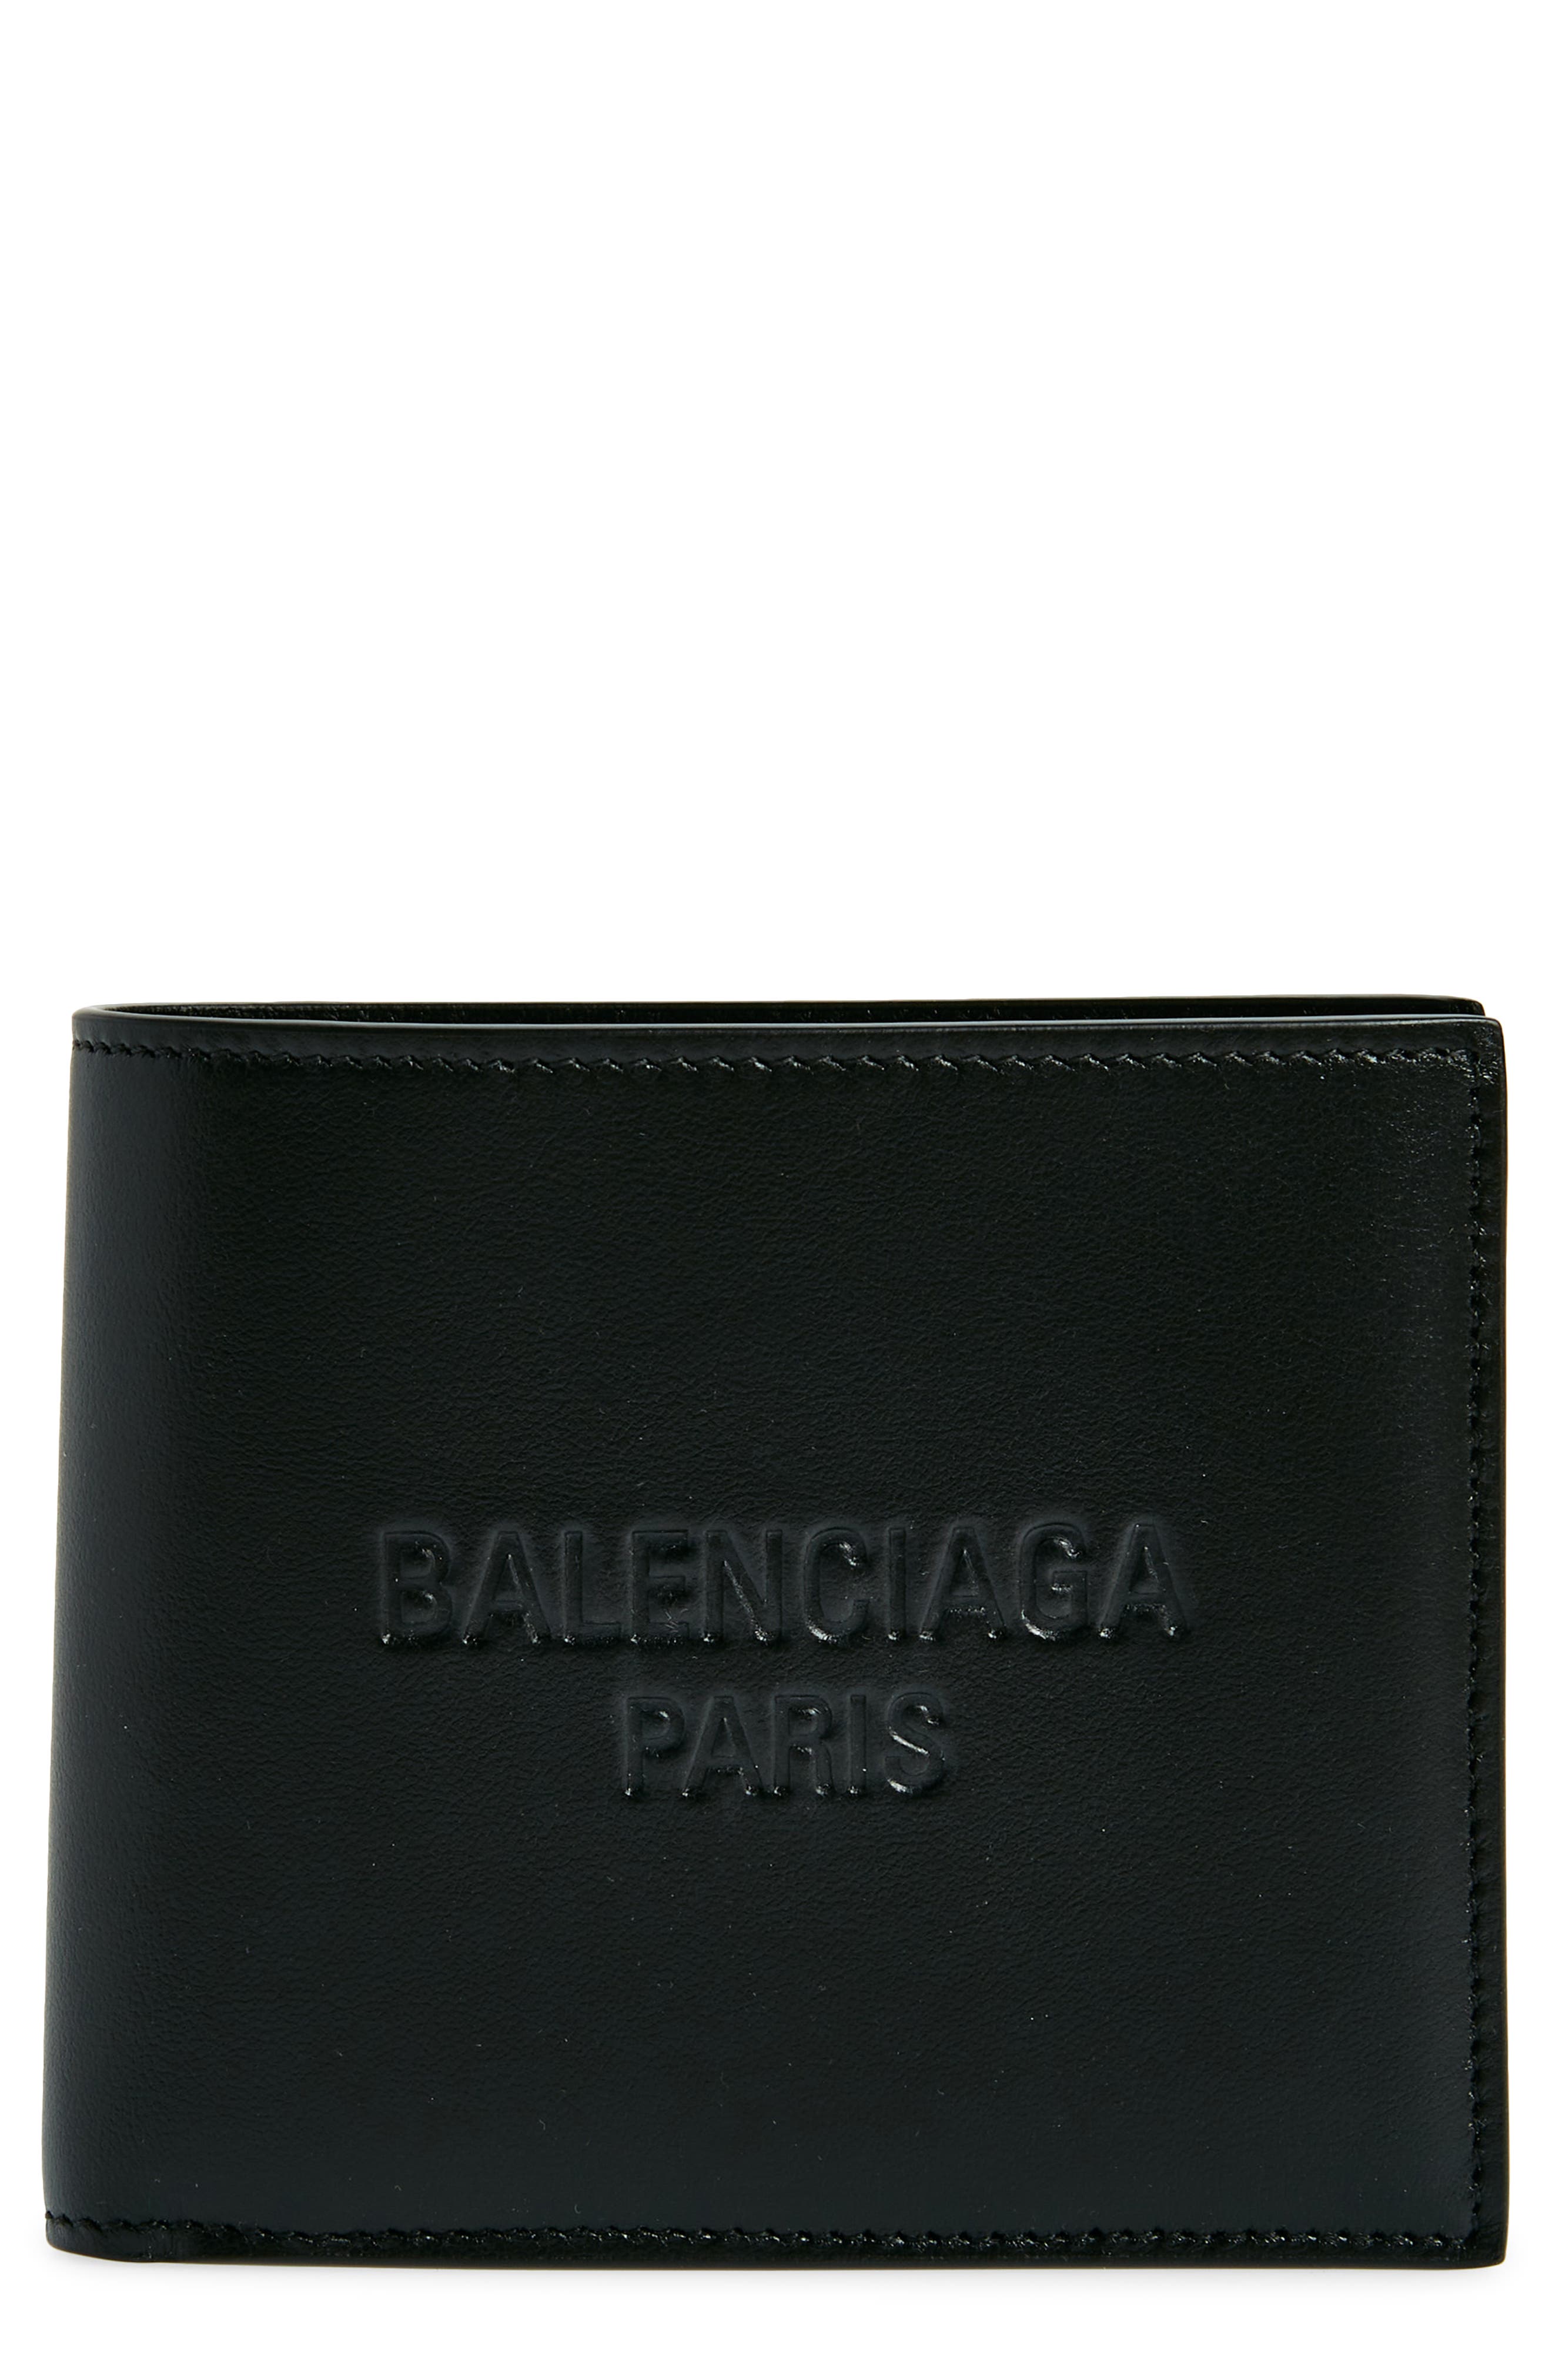 Balenciaga Wallets u0026 Card Cases | Nordstrom